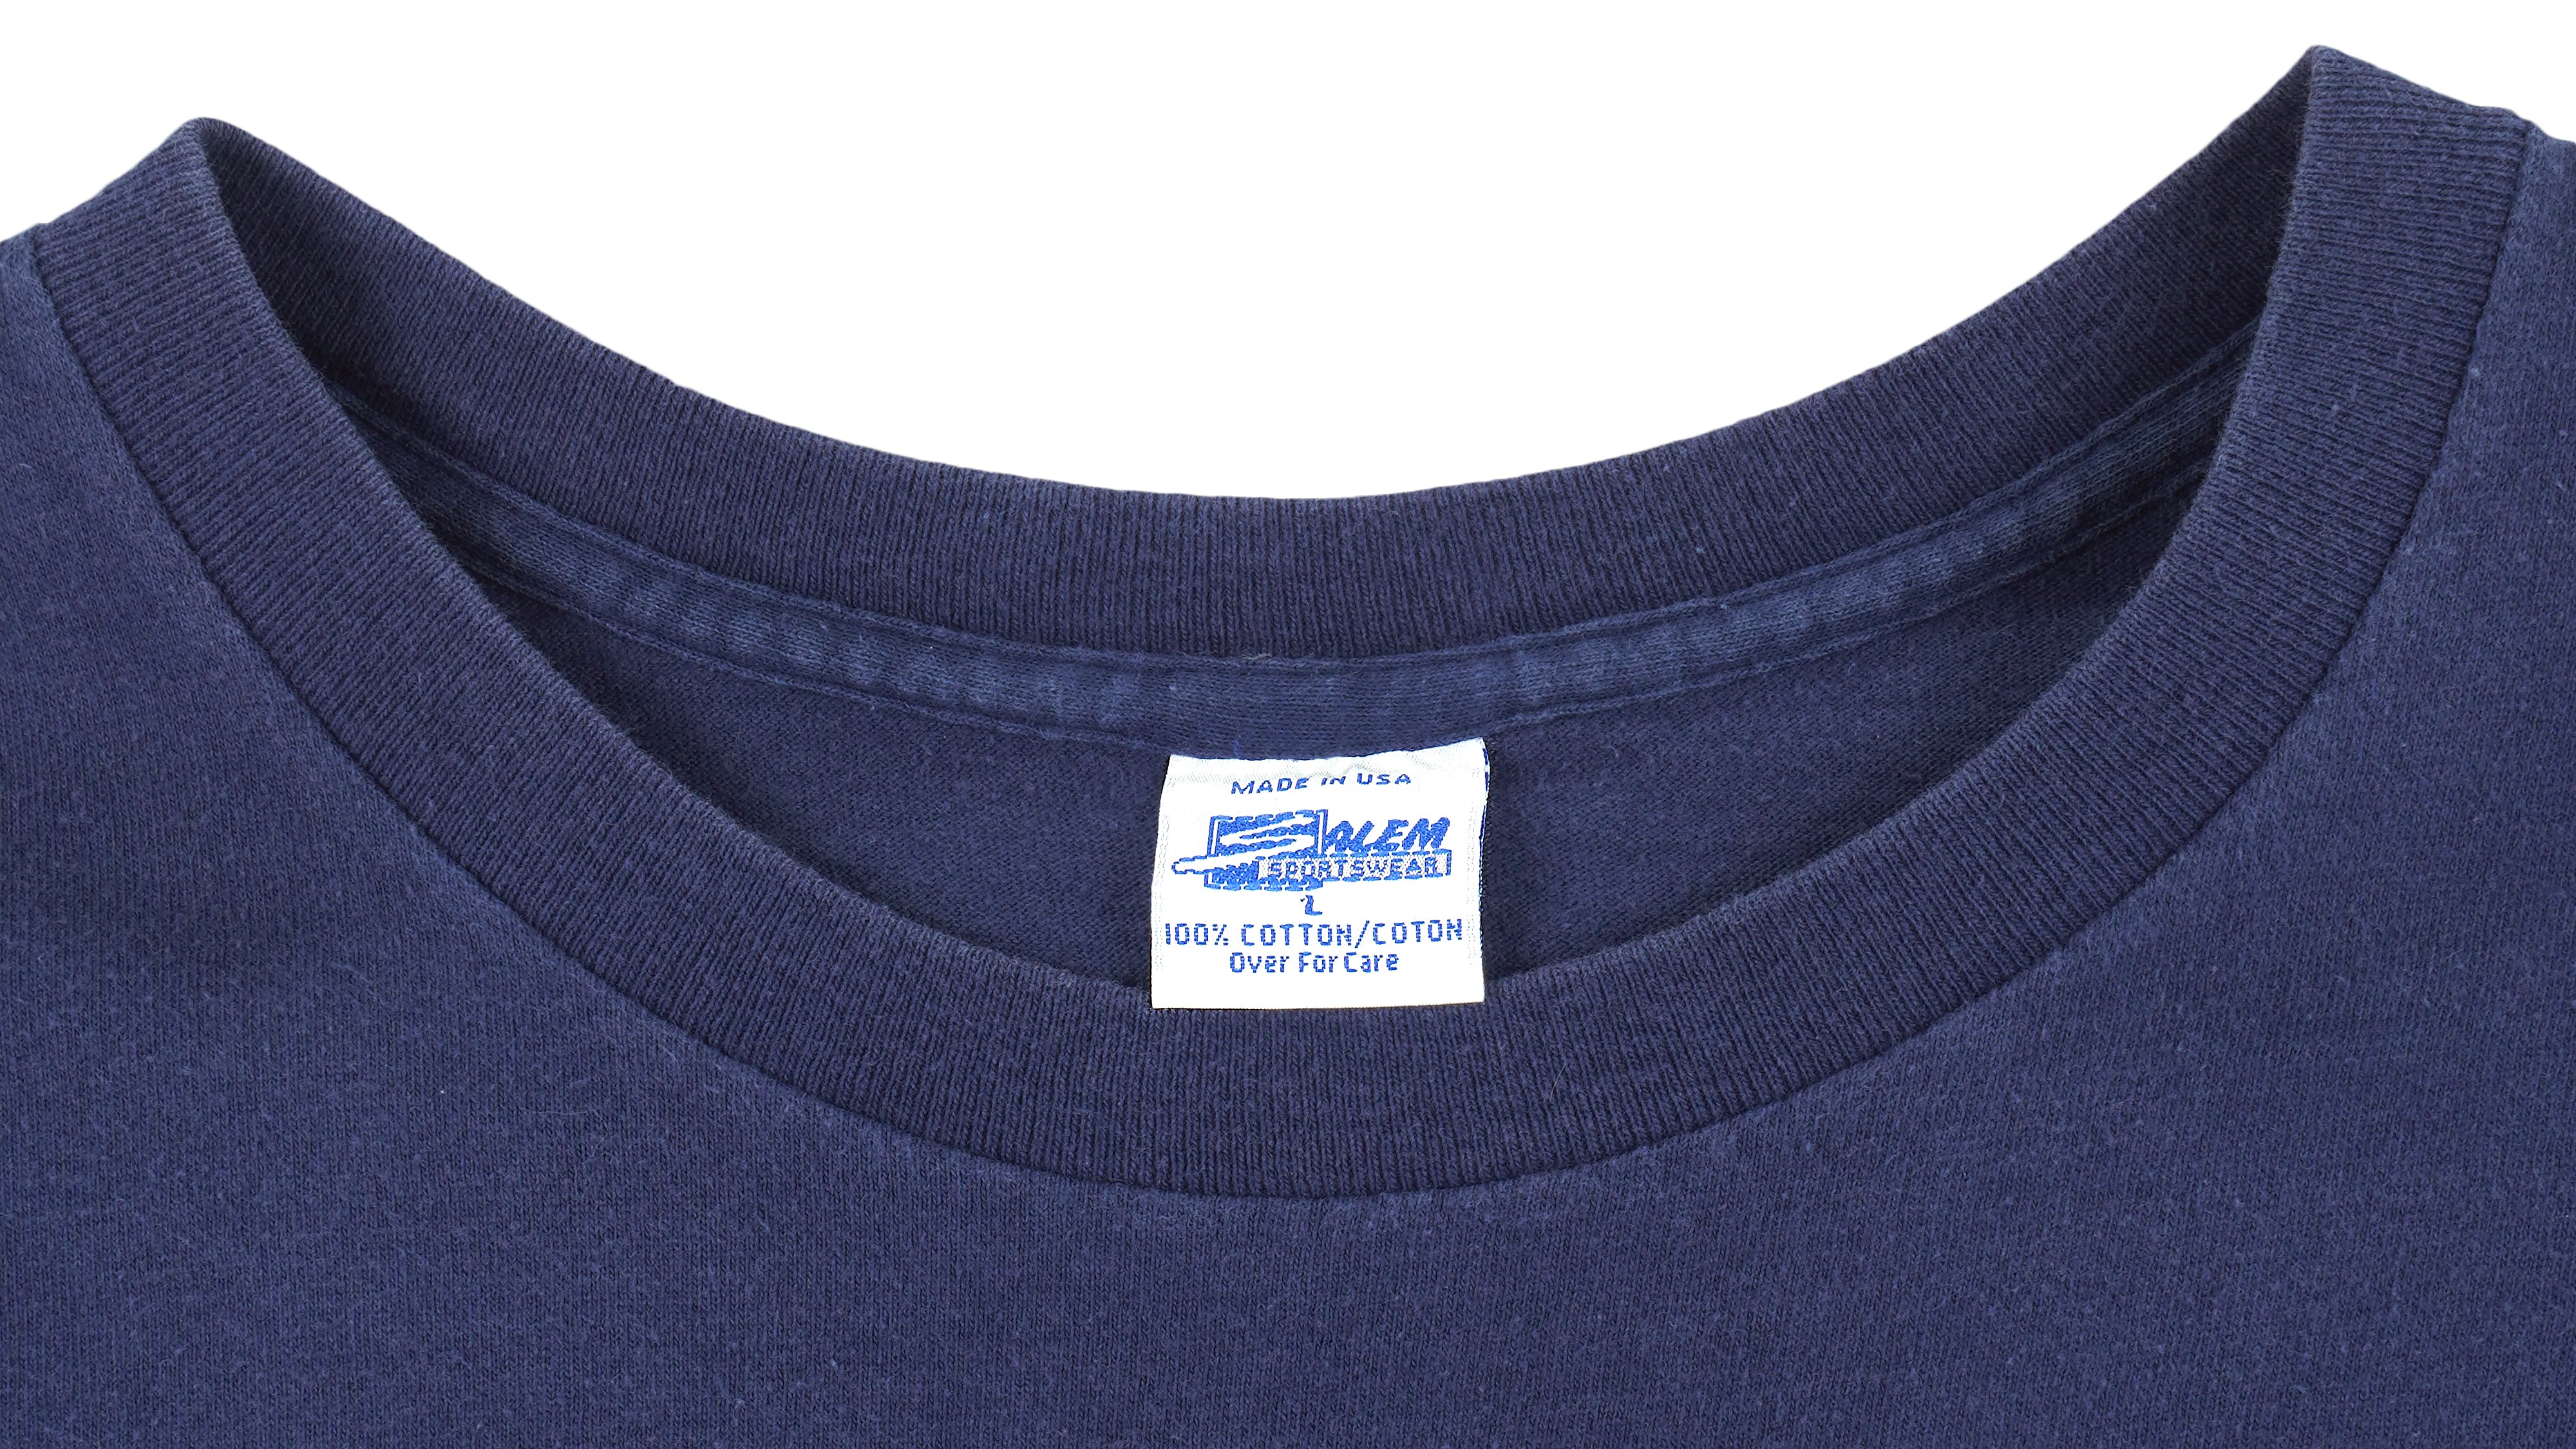 Vintage 1992 Atlanta Braves T-shirt Size L Salem Sport Wear 